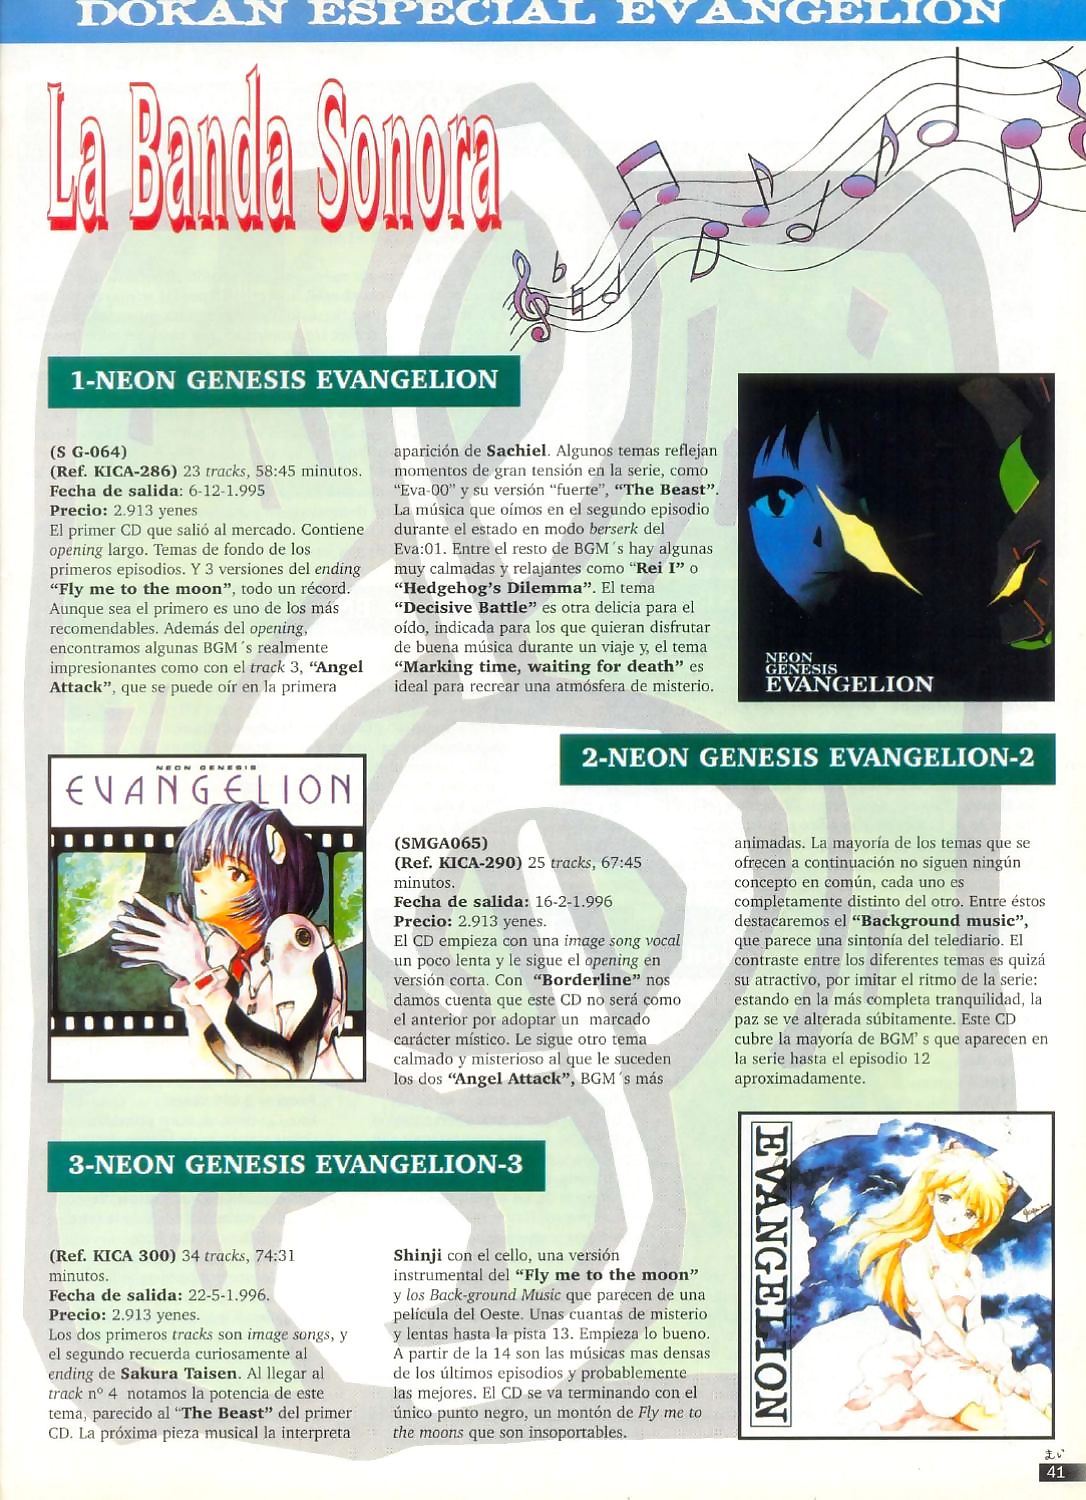 Revista Dokan Evangelion - part 3